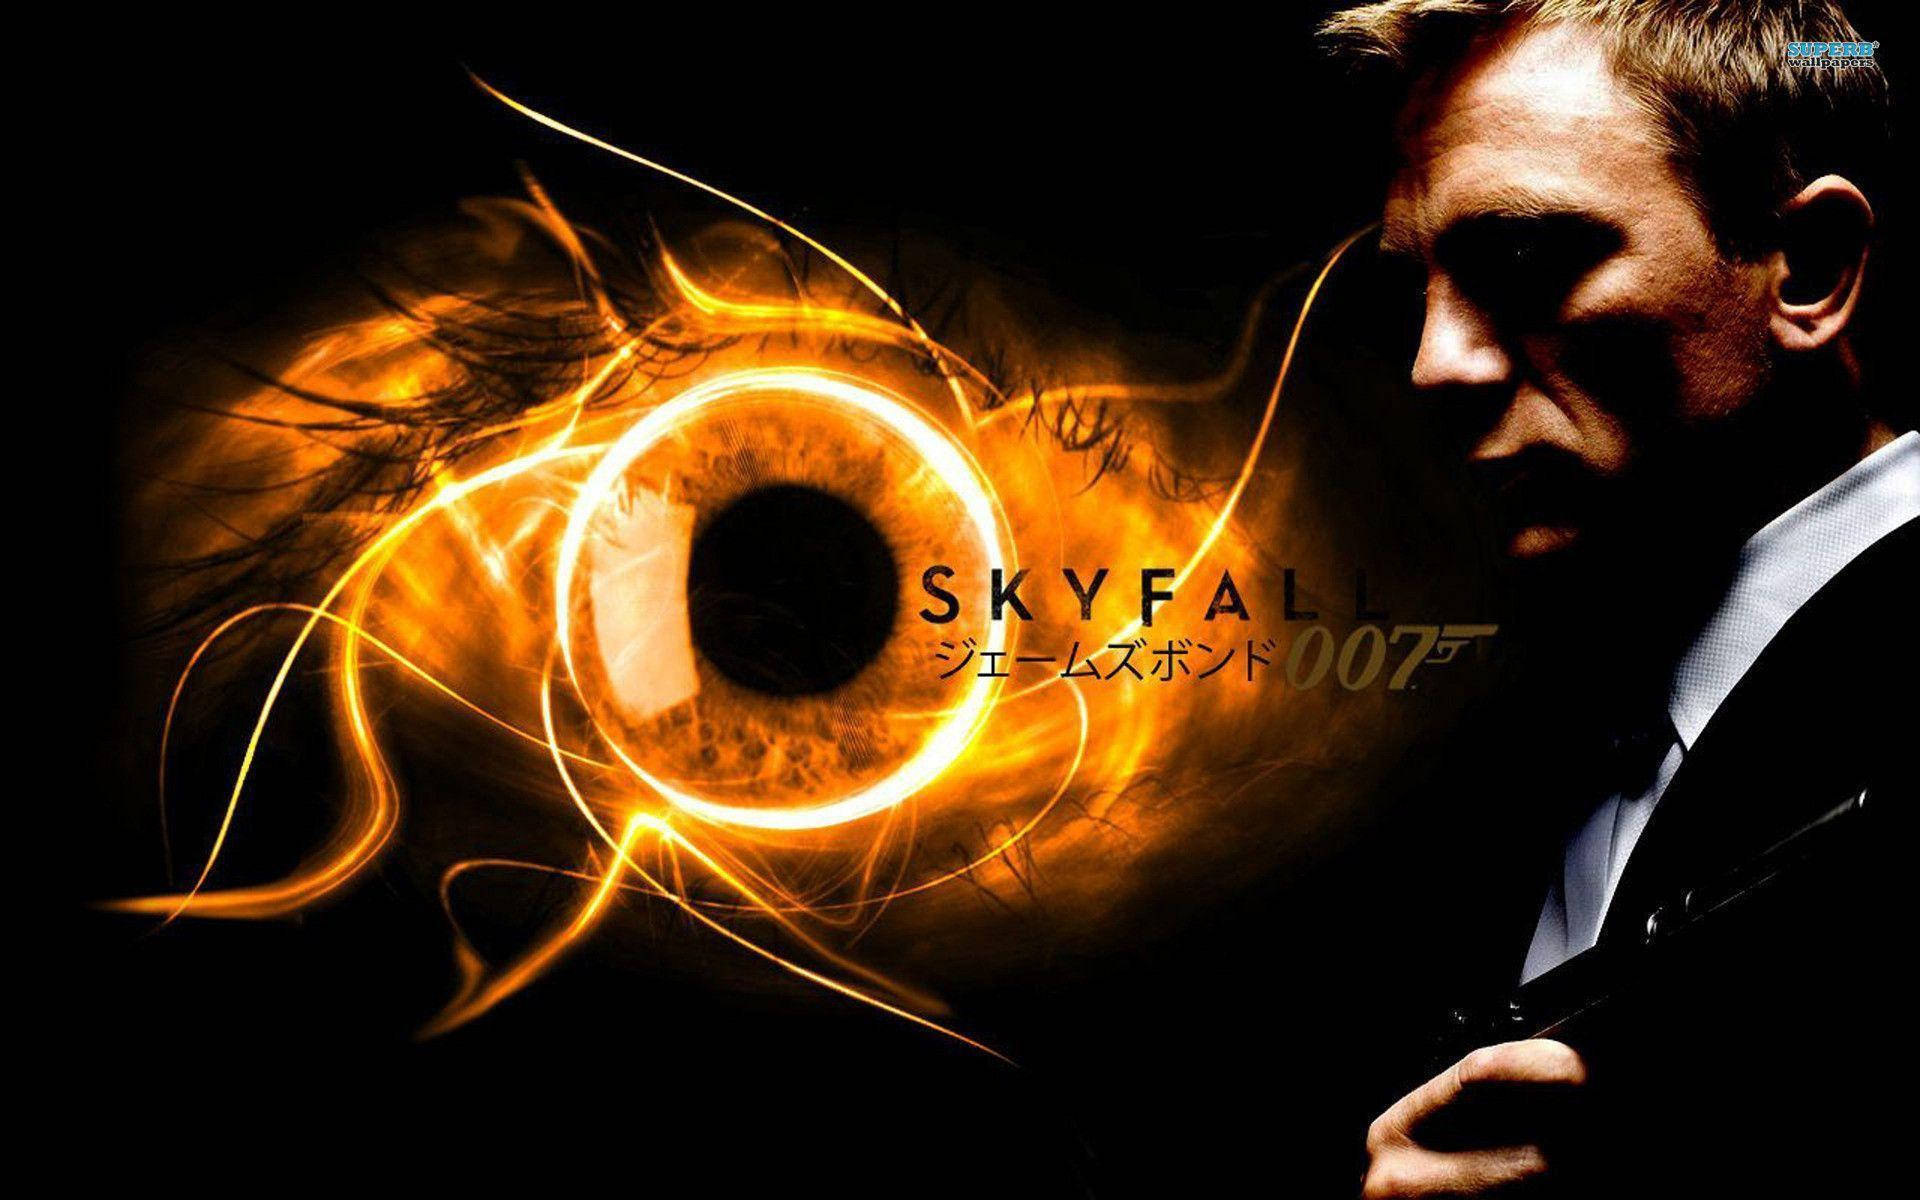 Poster Fiammeggiante Di James Bond Skyfall Sfondo